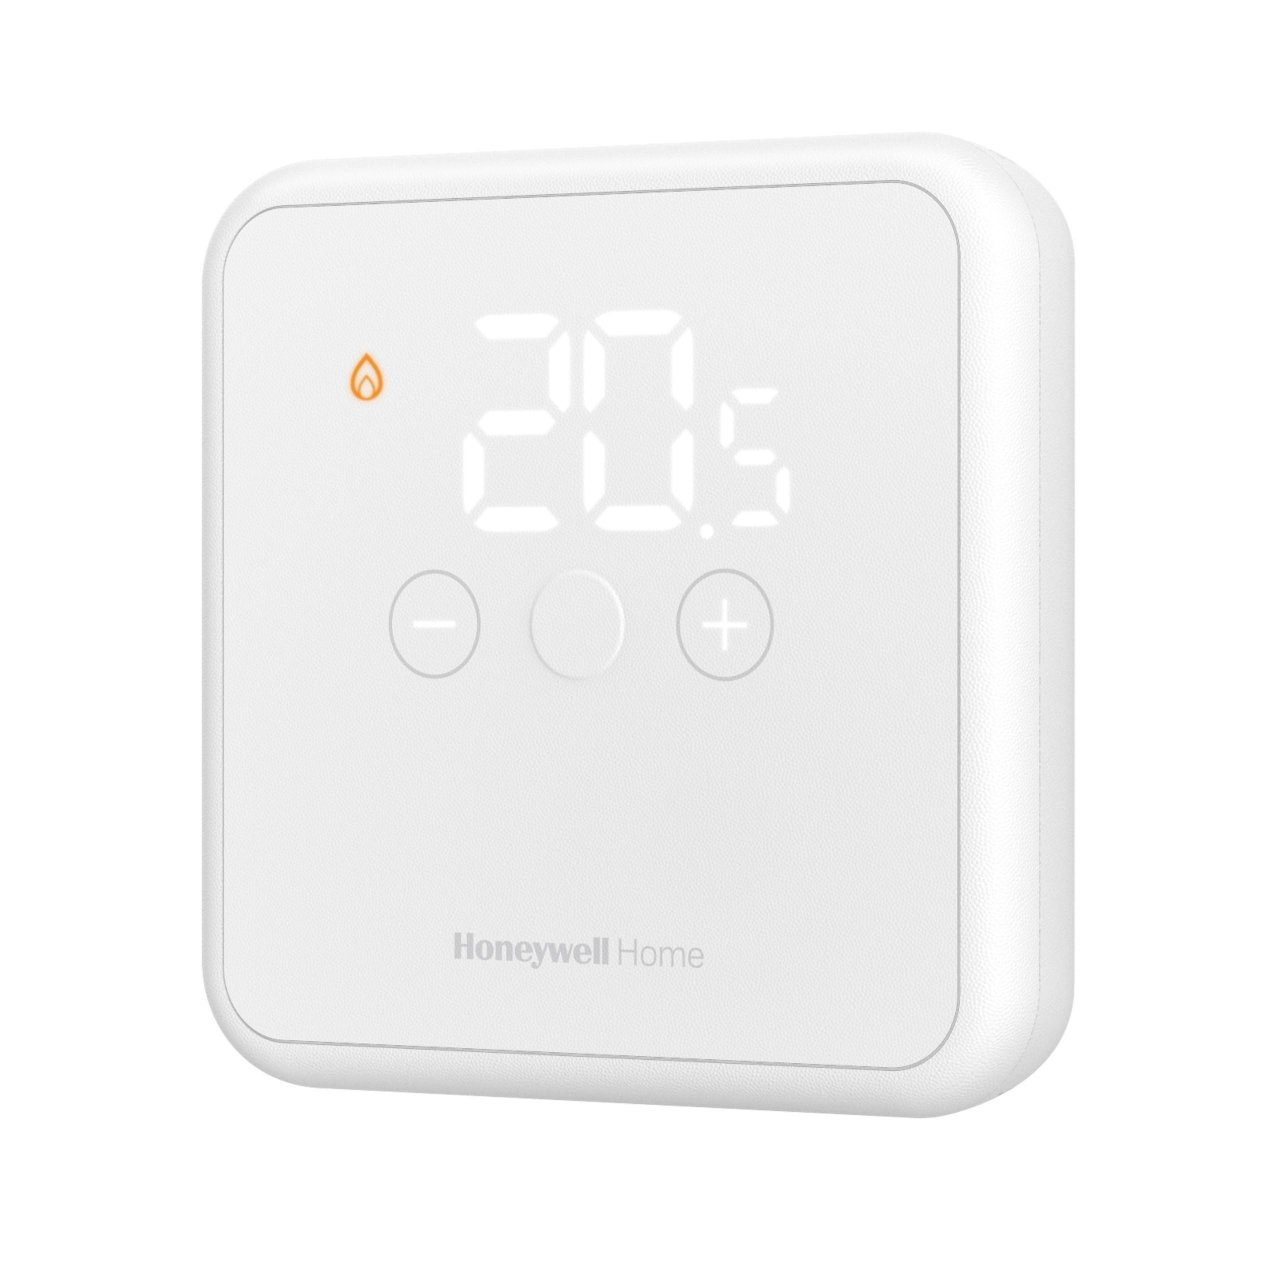 Drátový digitální termostat Honeywell DT4, bílý (DT40WT20)